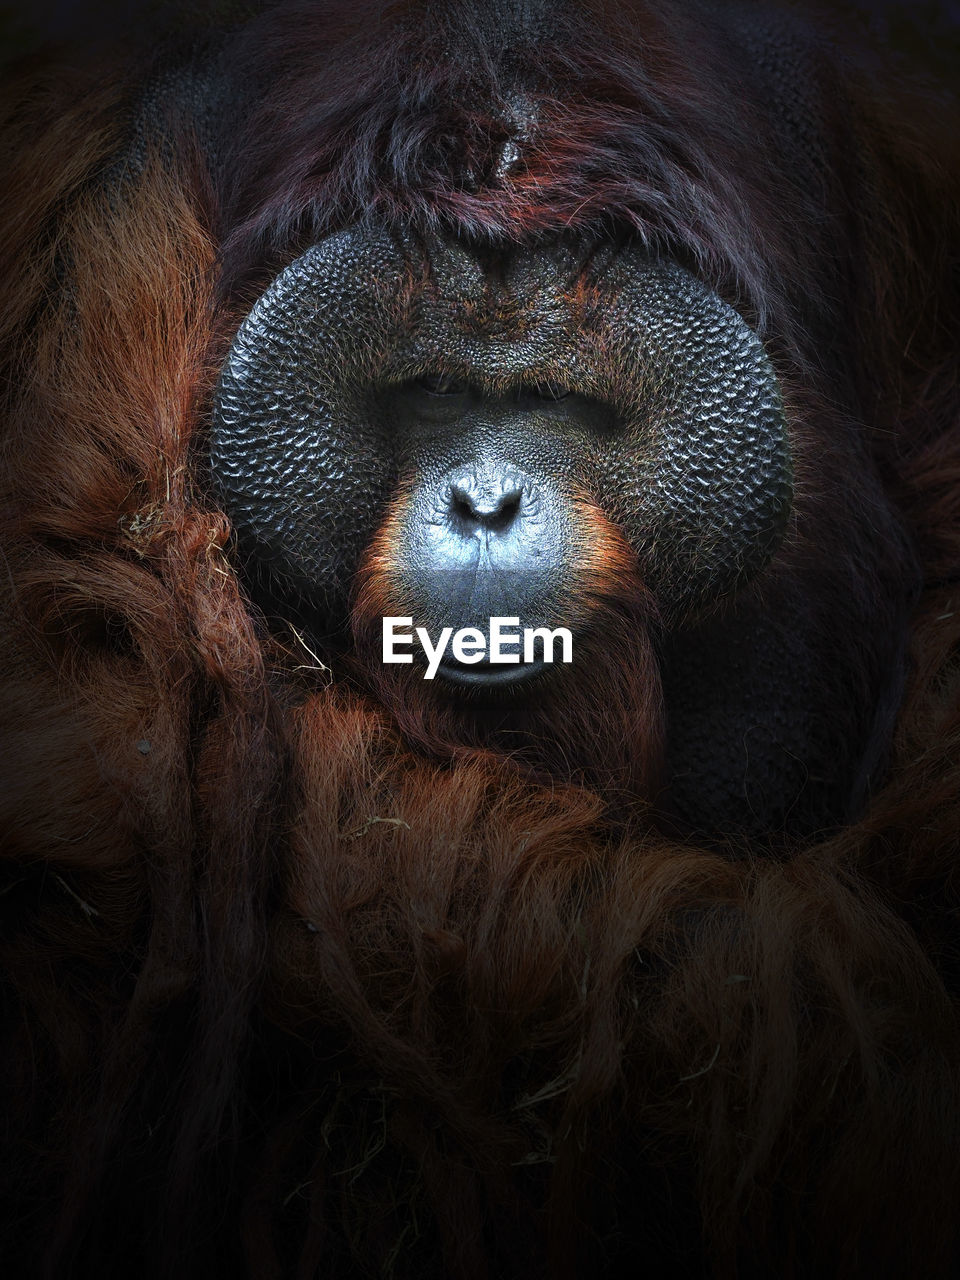 Close-up portrait of orangutan